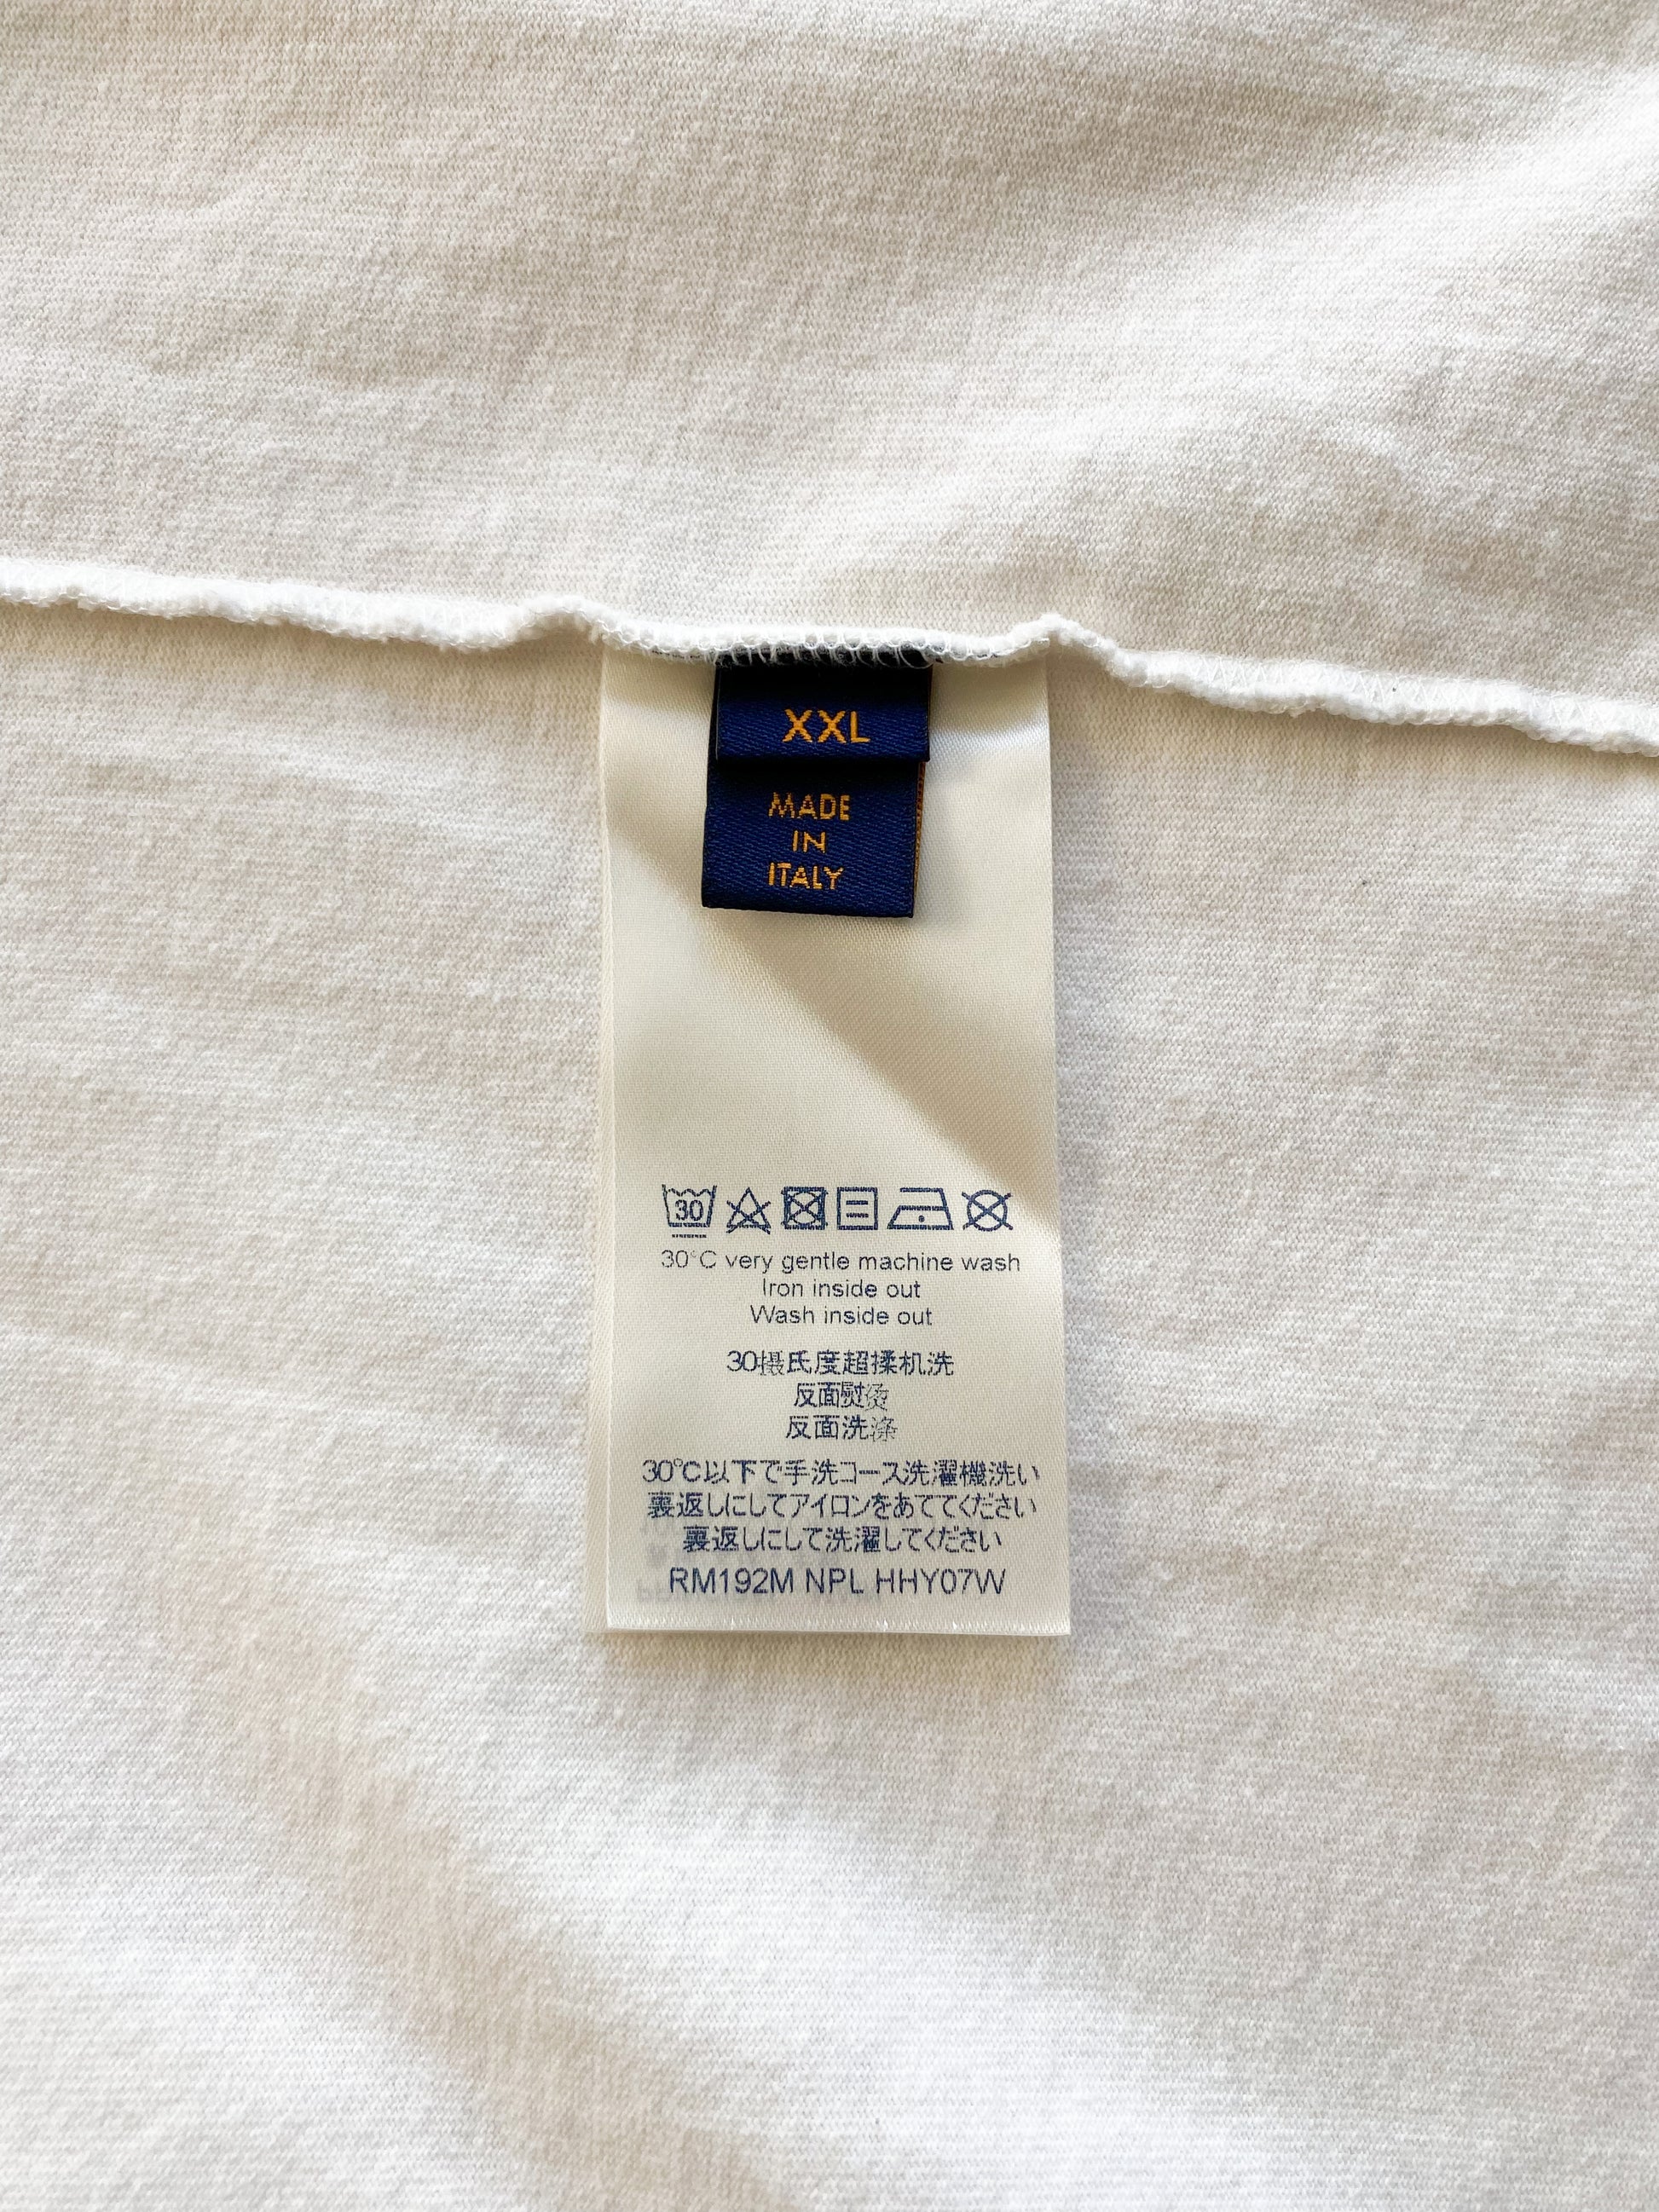 Louis Vuitton White Barcode Logo T-Shirt – Savonches